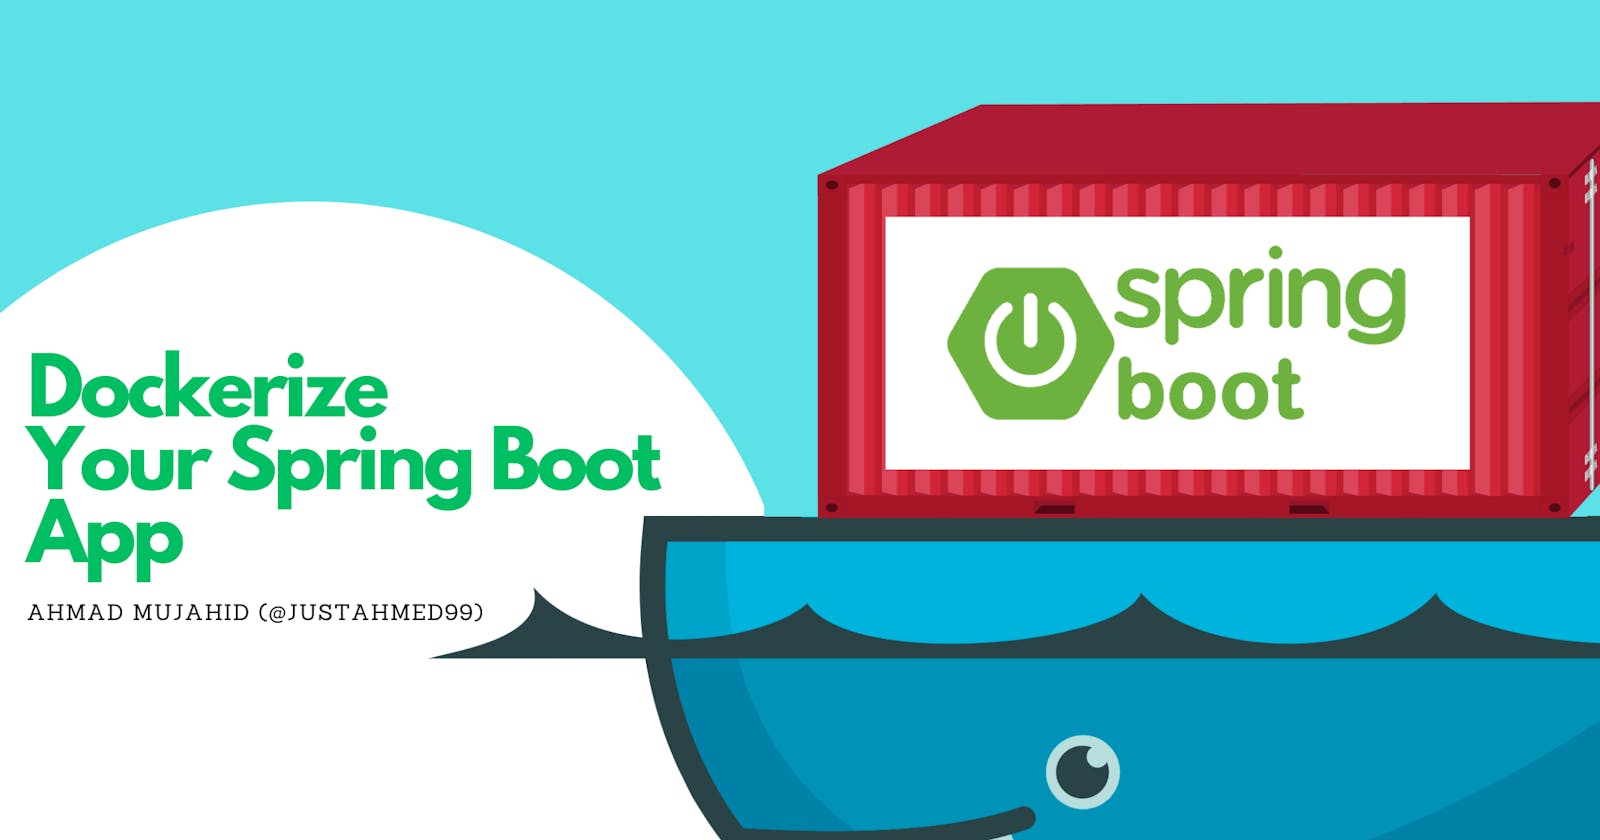 Dockerize Your Spring Boot App